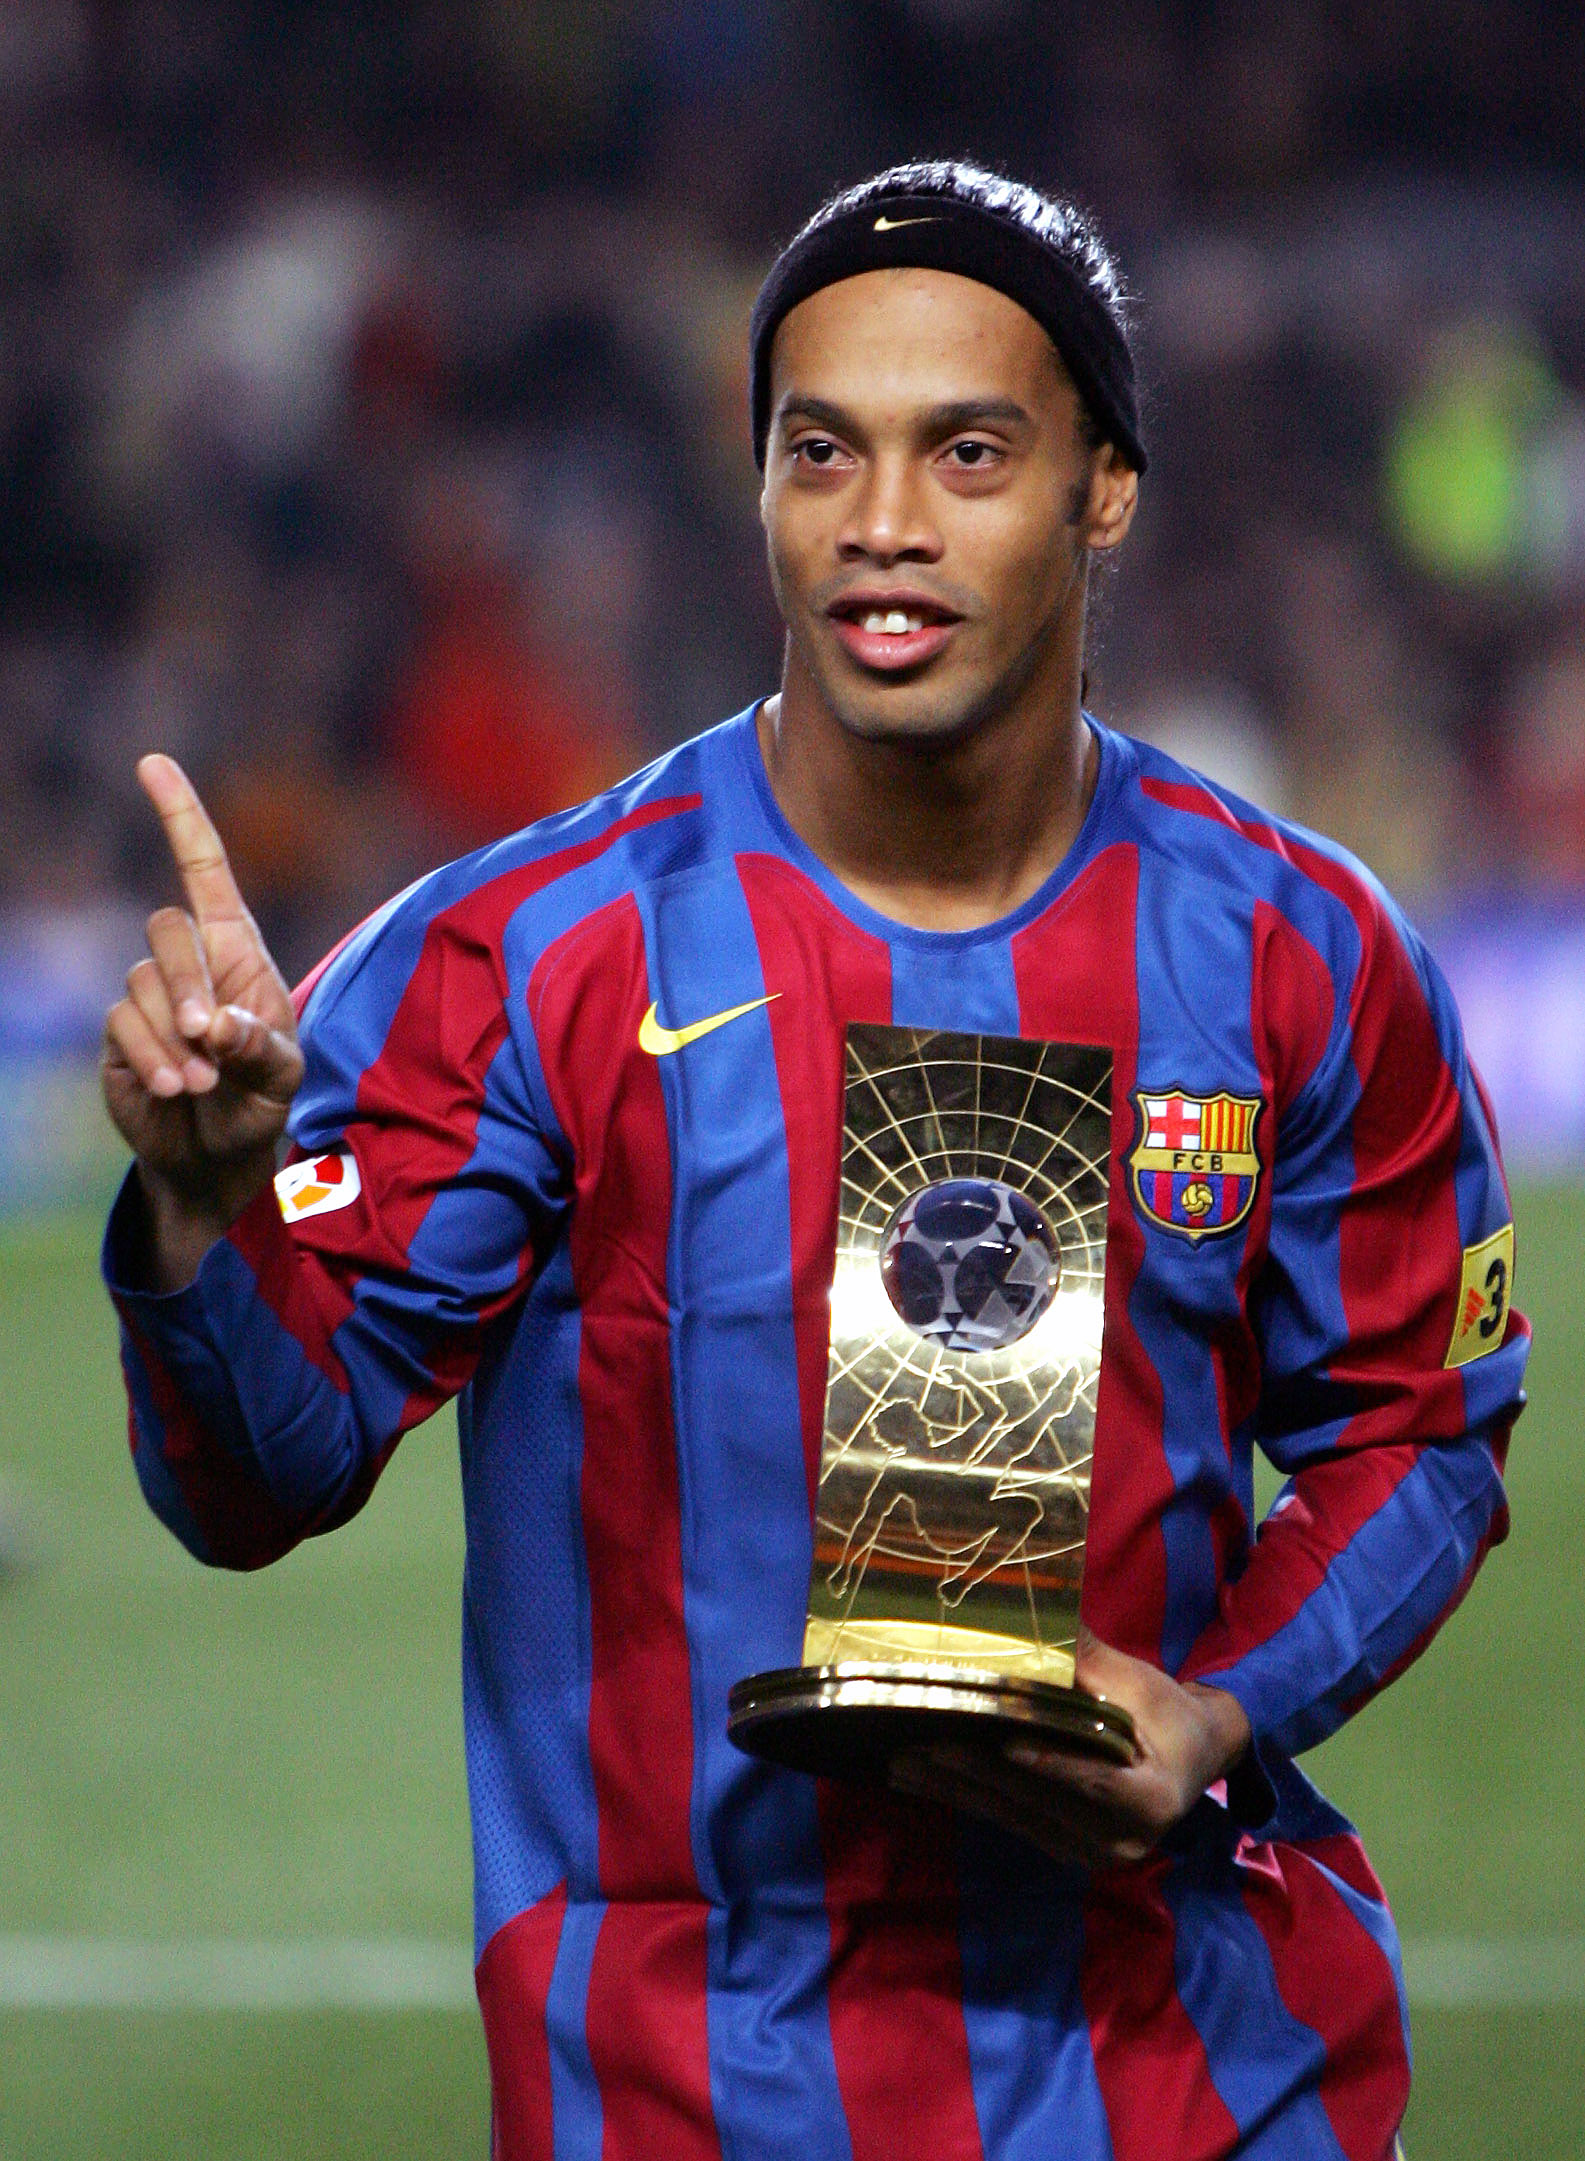 Barcelona's Ronaldinho of Brazil shows his FIFA world player 